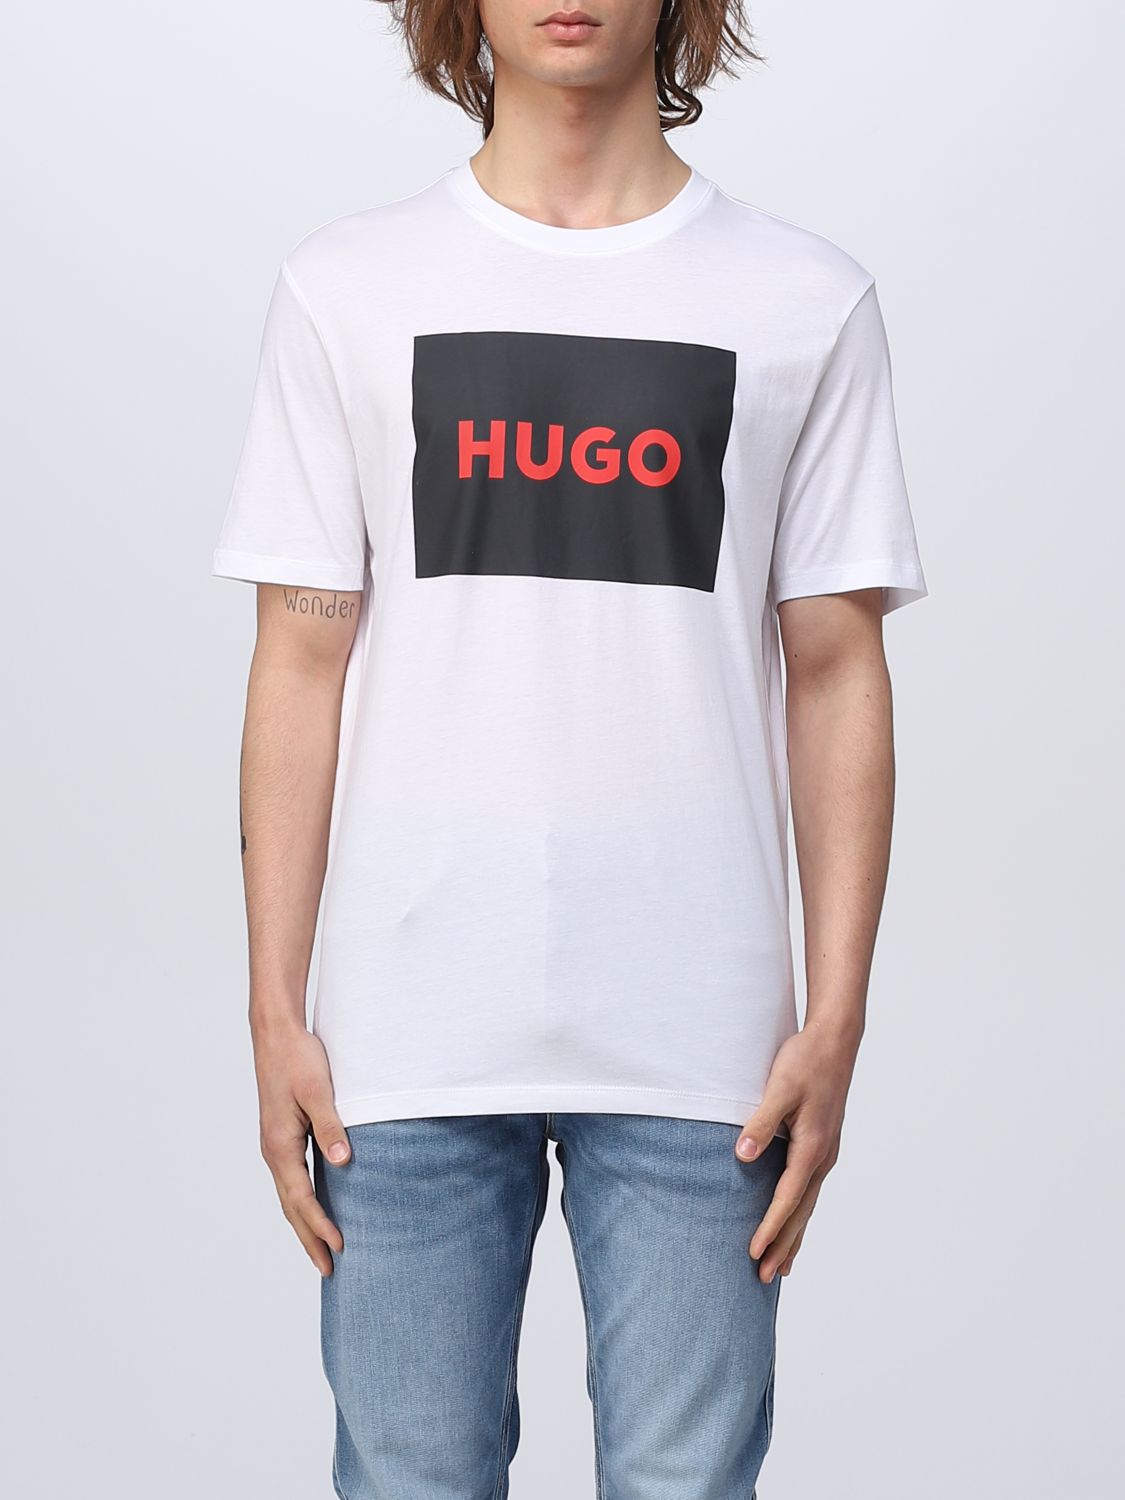 t-shirt for man - White | Hugo t-shirt 50467952 at GIGLIO.COM